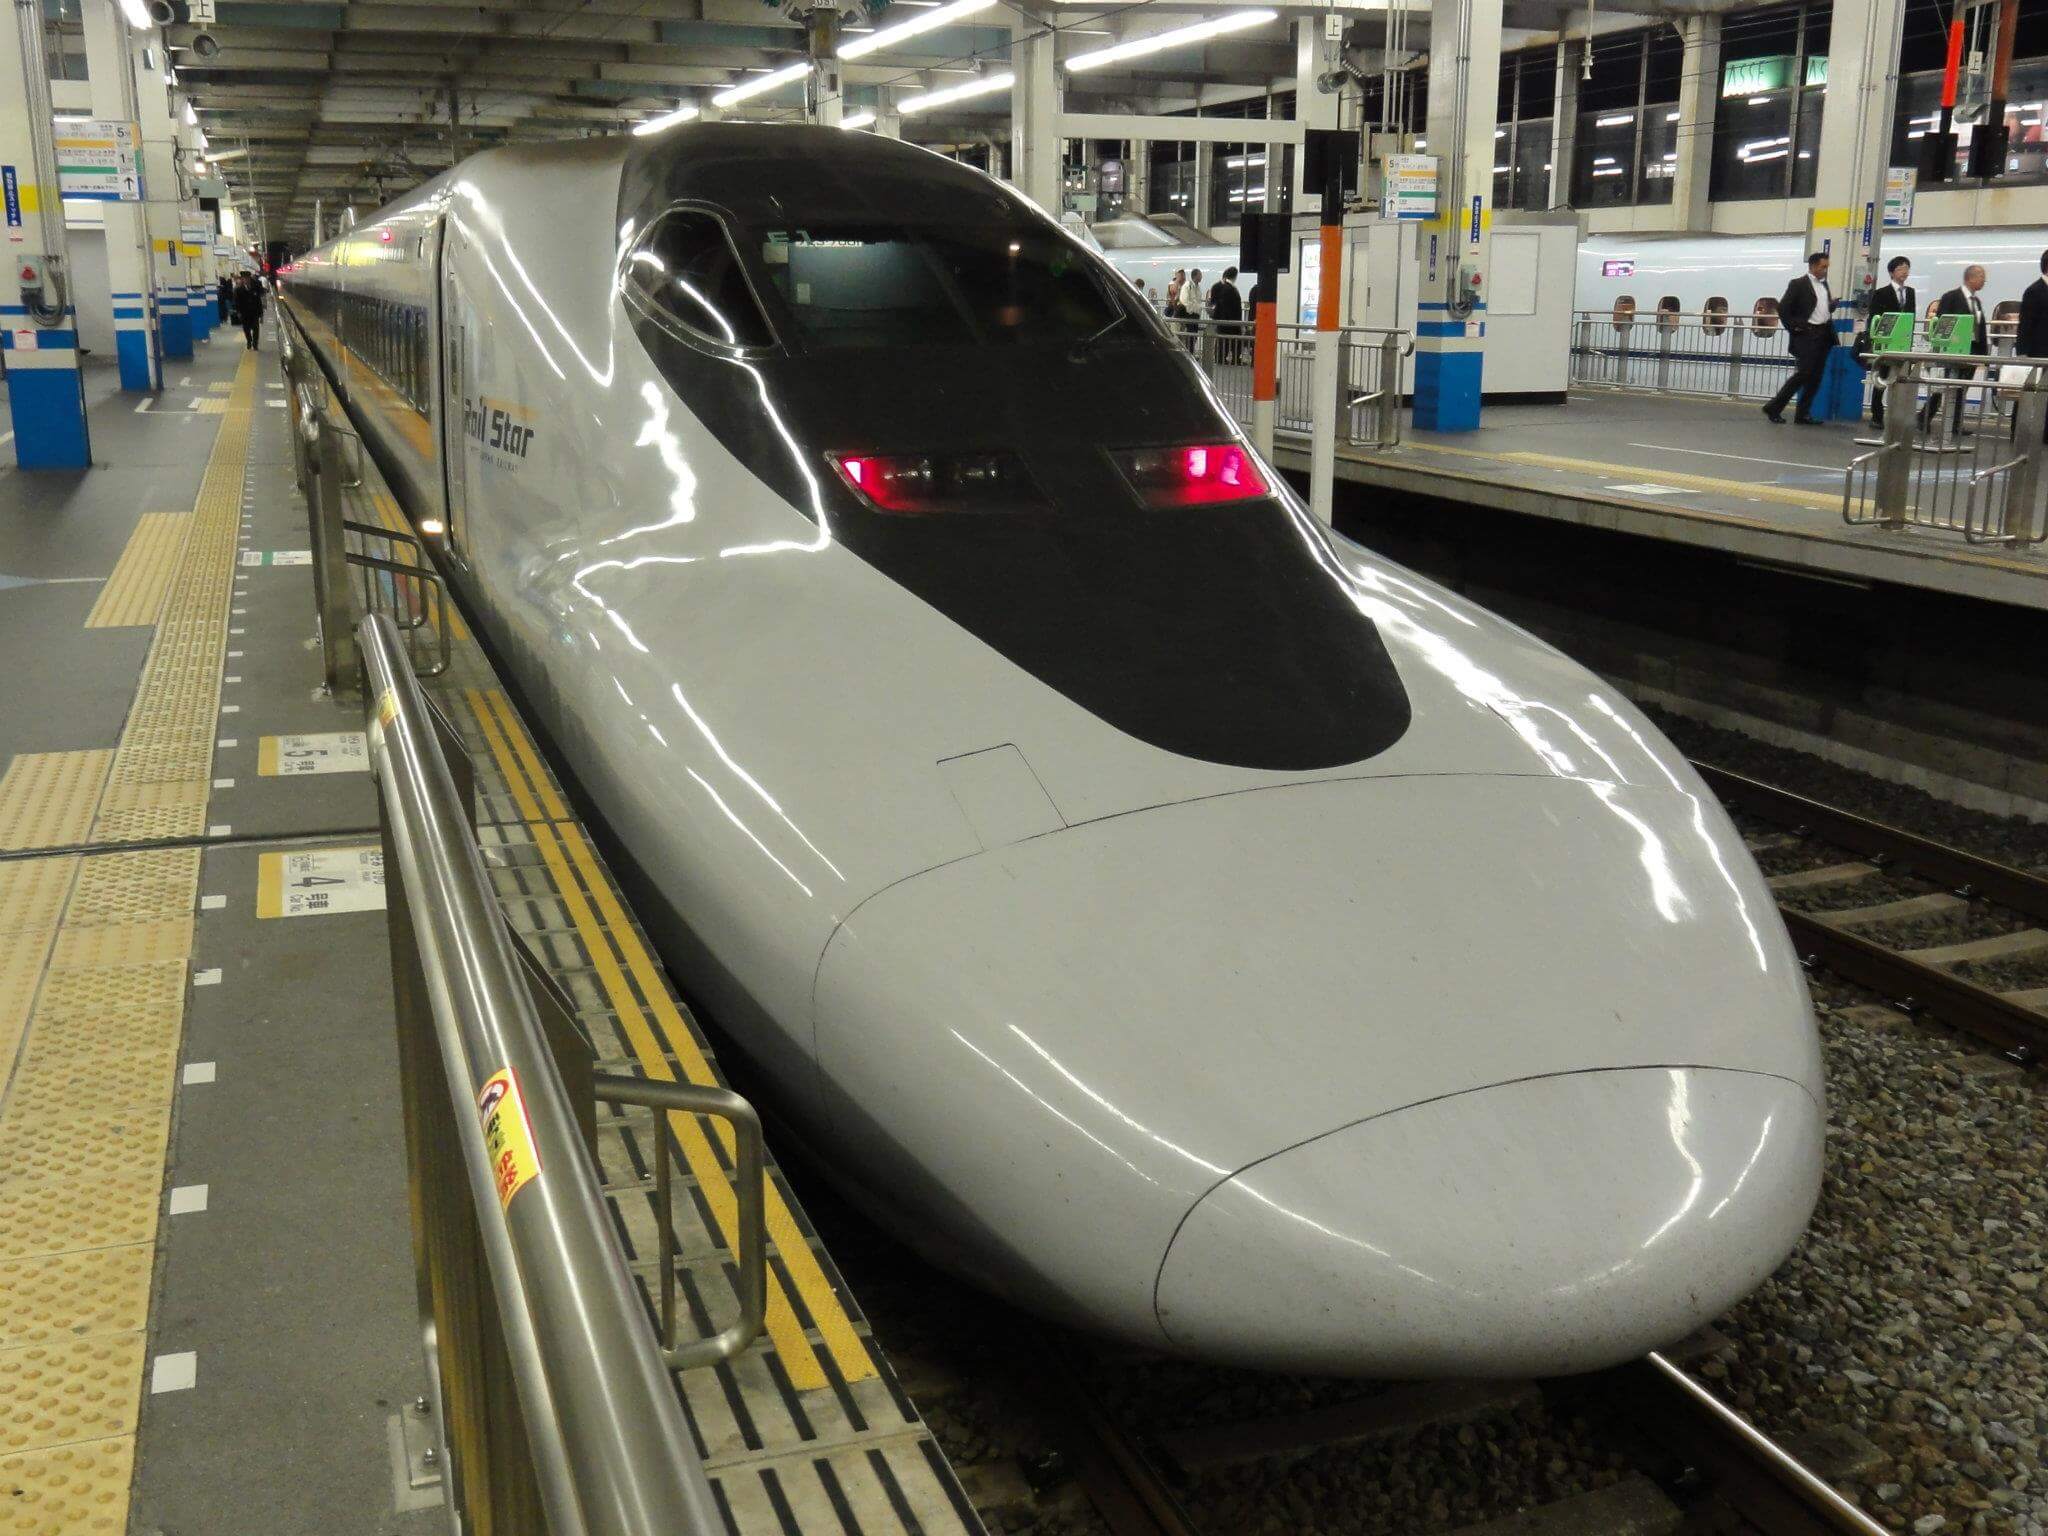 travel japan fast track